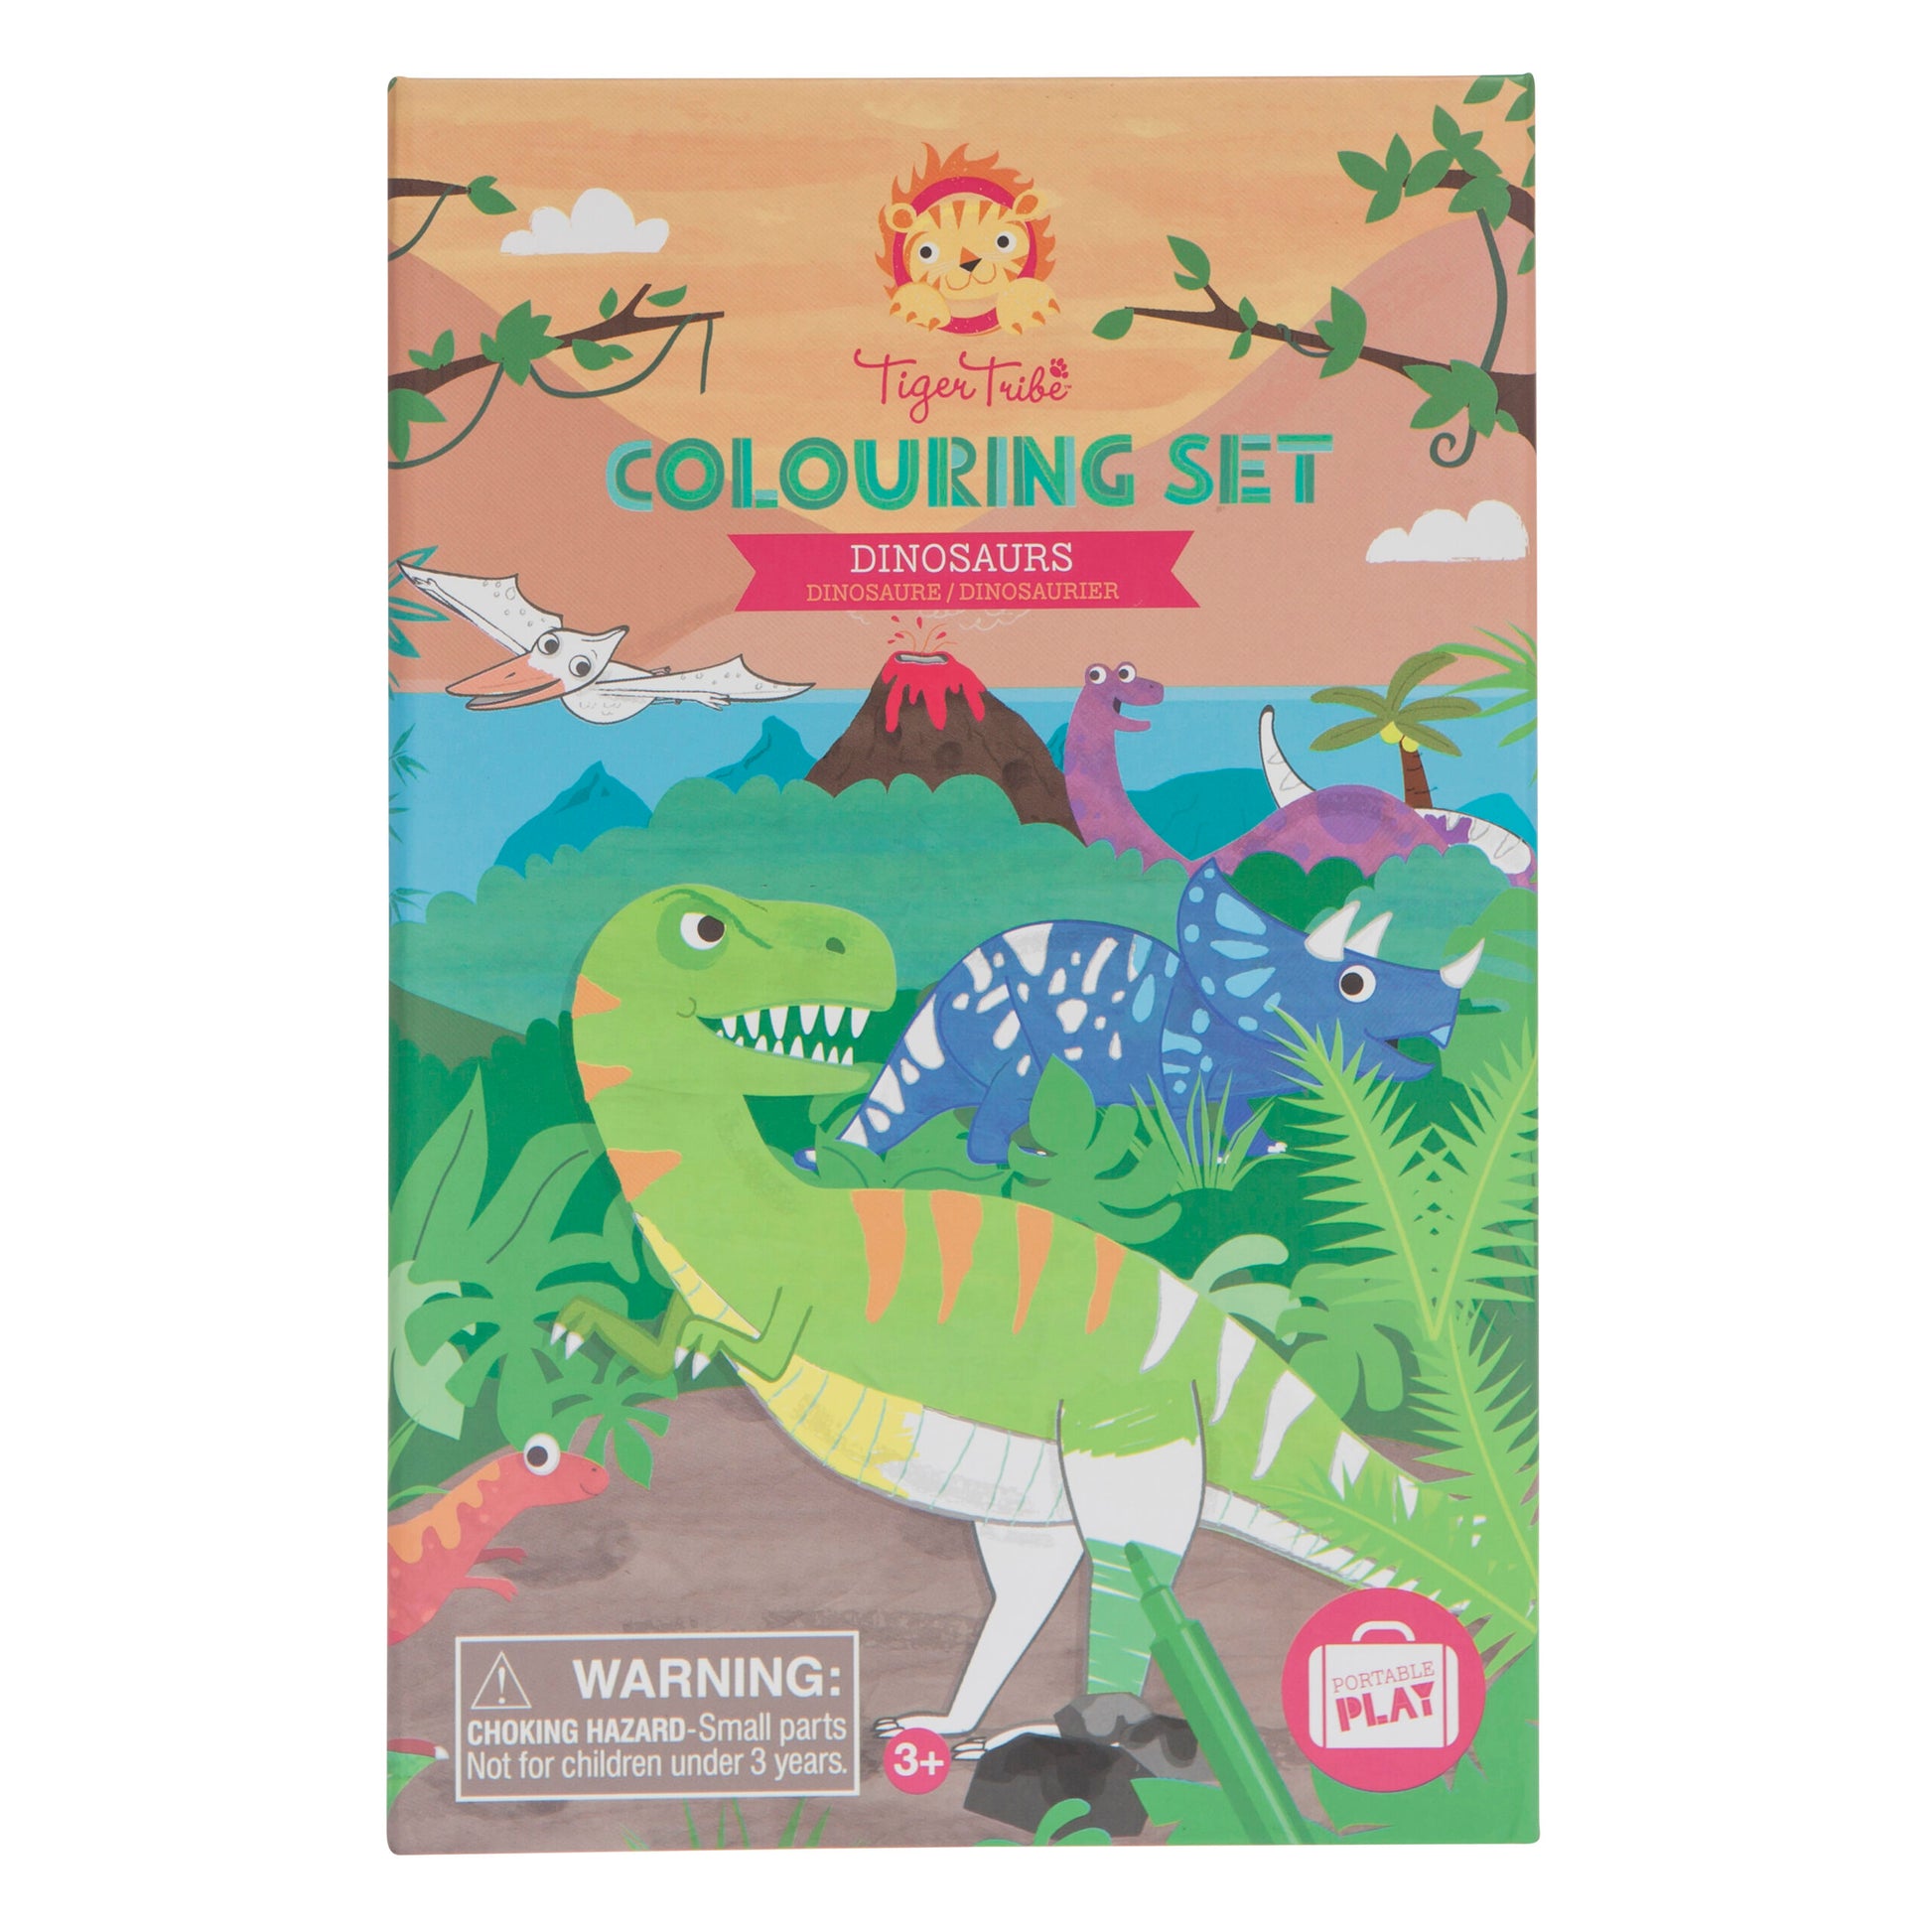 Dinosaurs colouring set